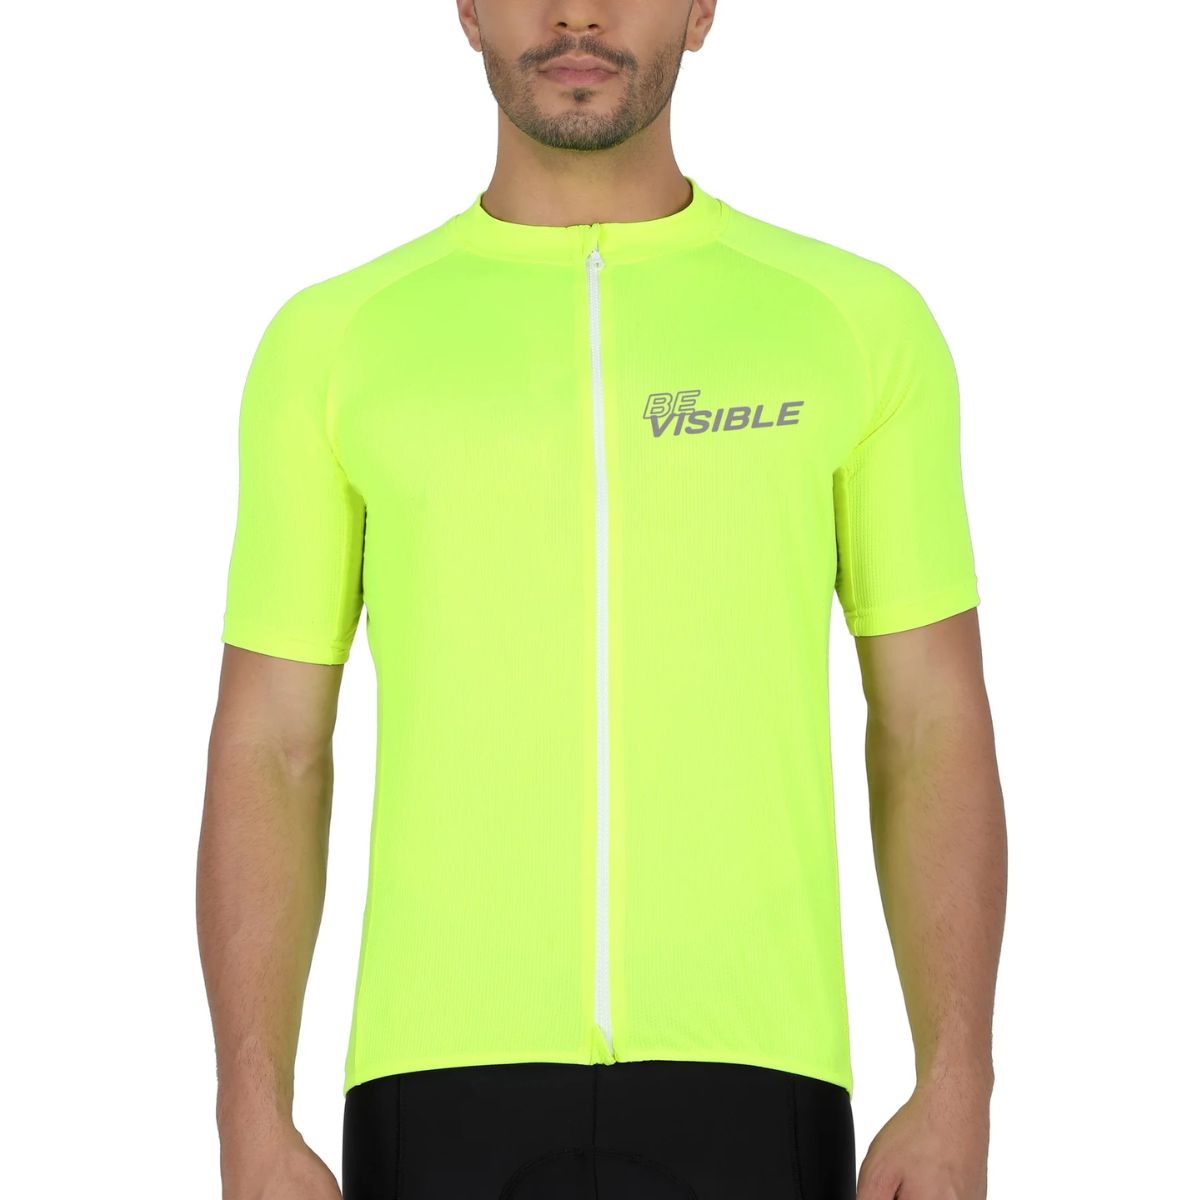 Mens BeVisible Cycling Jersey - Half Sleeves - Neon Green 1